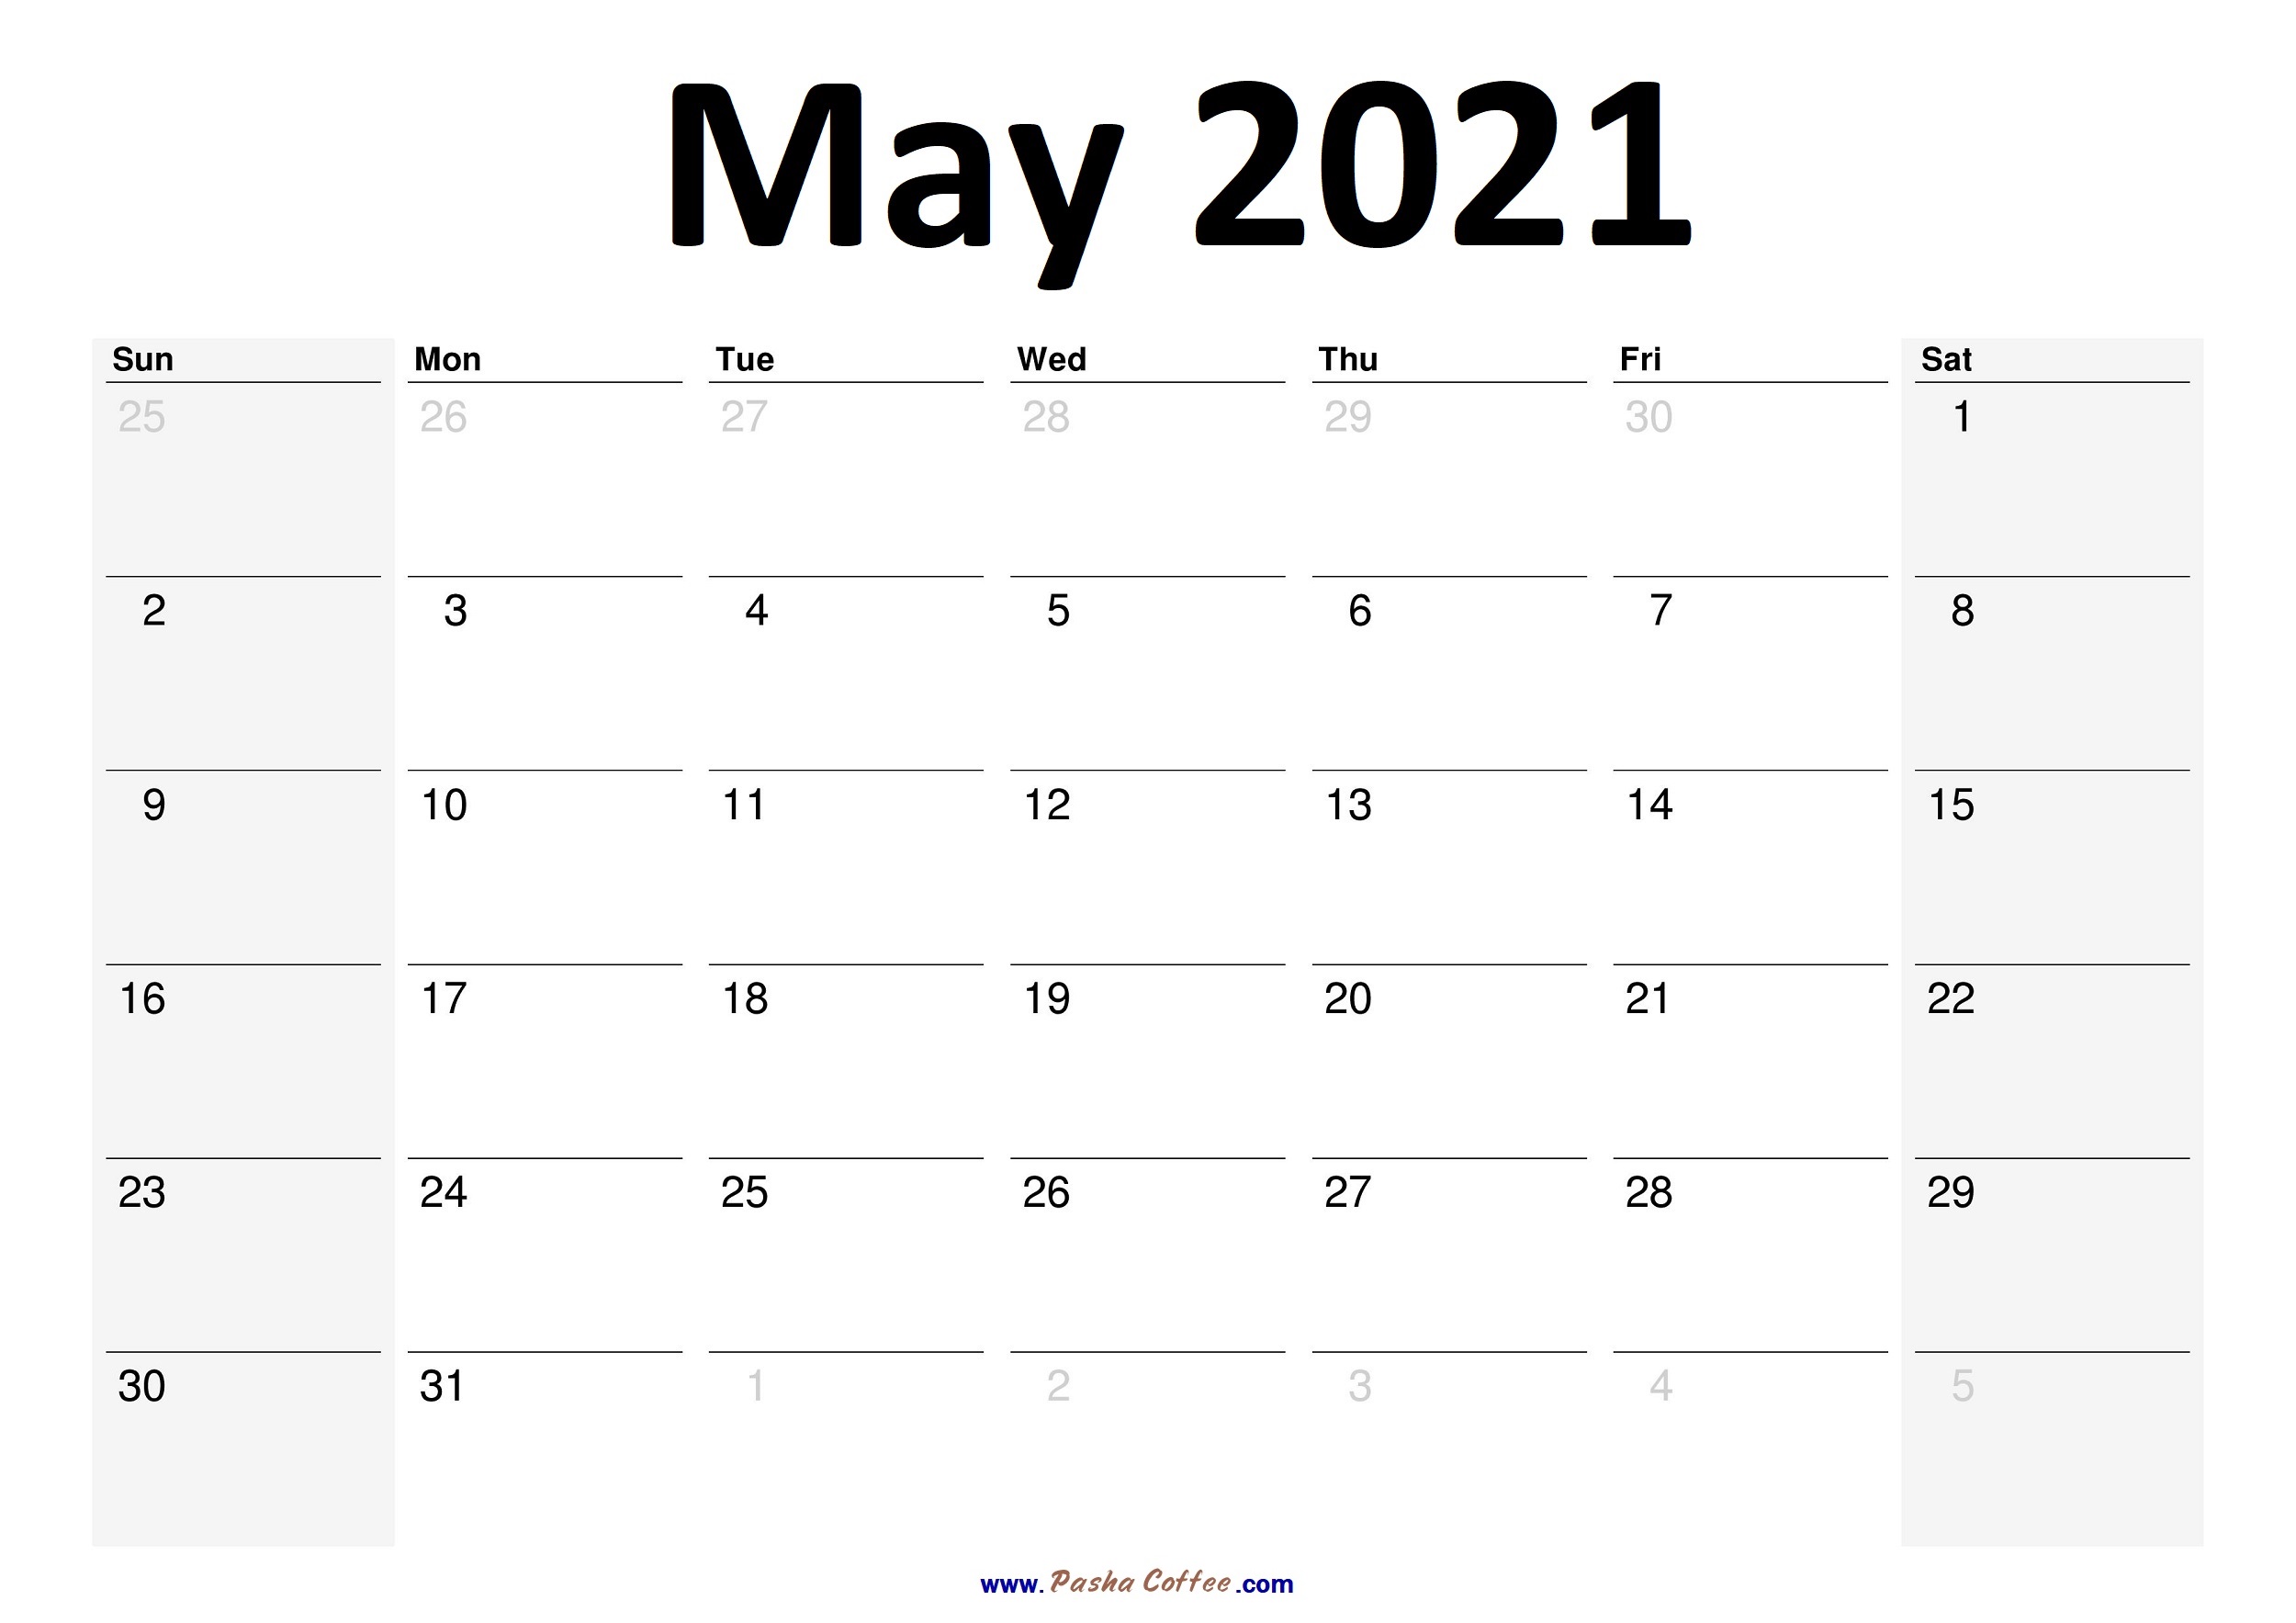 2021-May-Calendar-Planner01